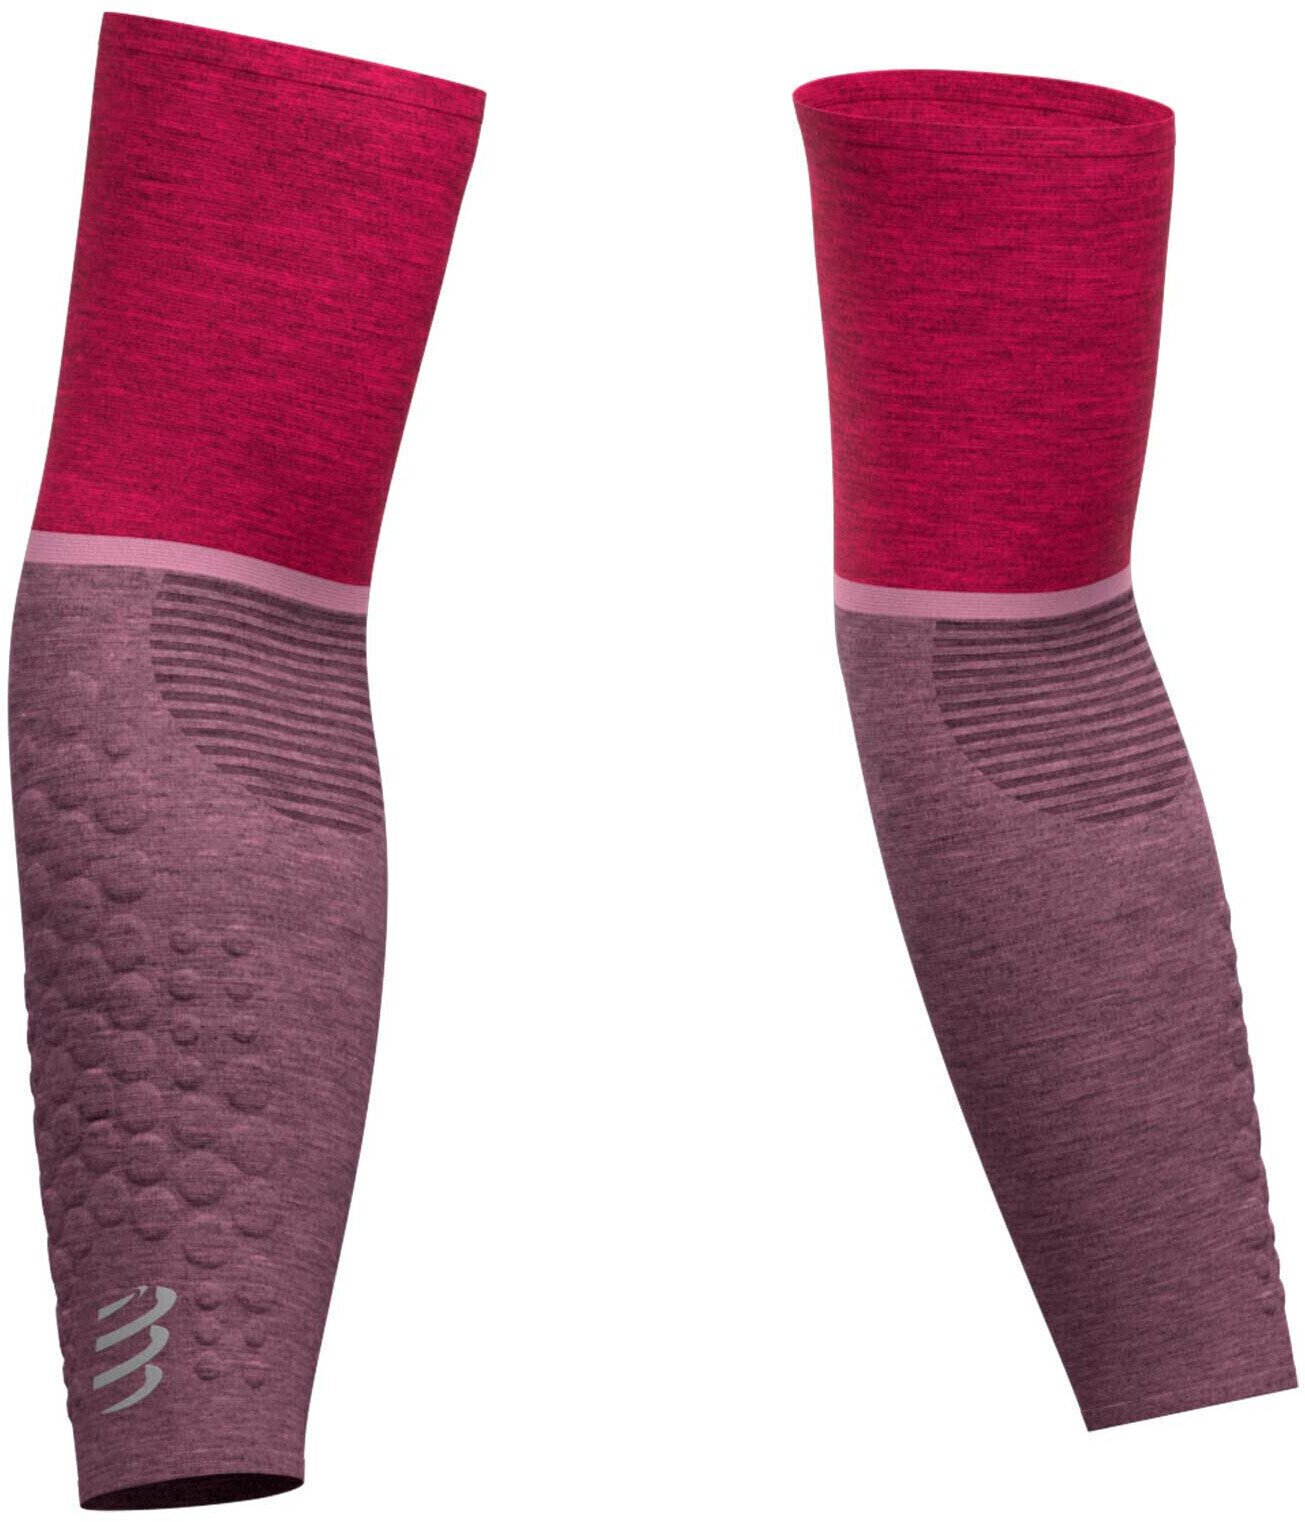 Running arm warmers Compressport ArmForce Ultralight Pink Melange T1 Running arm warmers